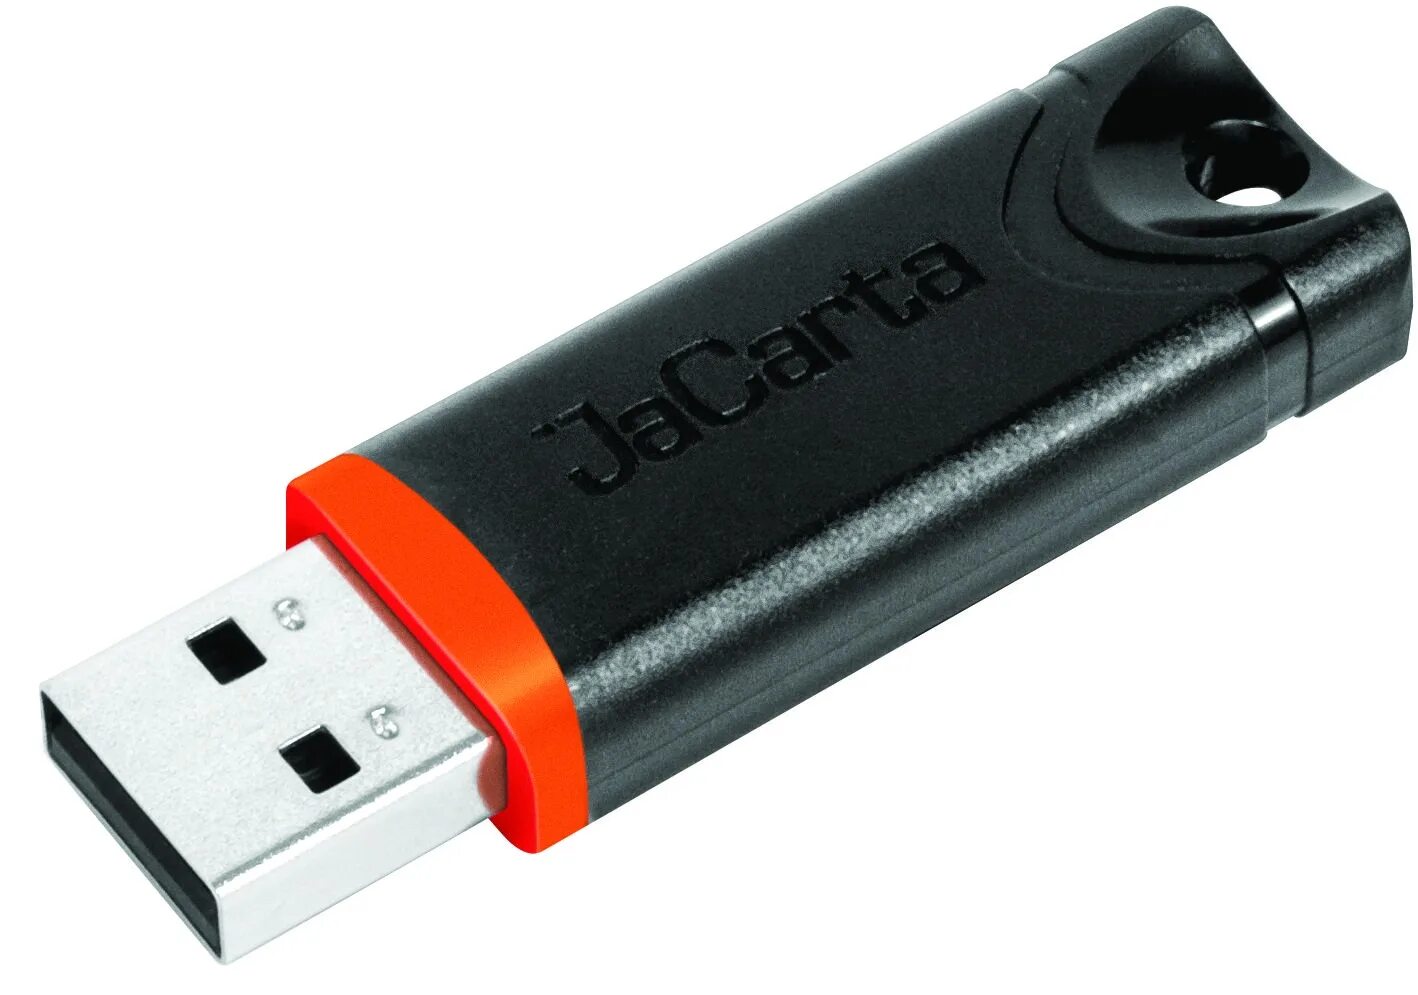 Usb токен купить. USB-токен Jacarta. USB токен Джакарта. USB-токен Jacarta PKI (XL). USB-токен Jacarta Pro (Nano).